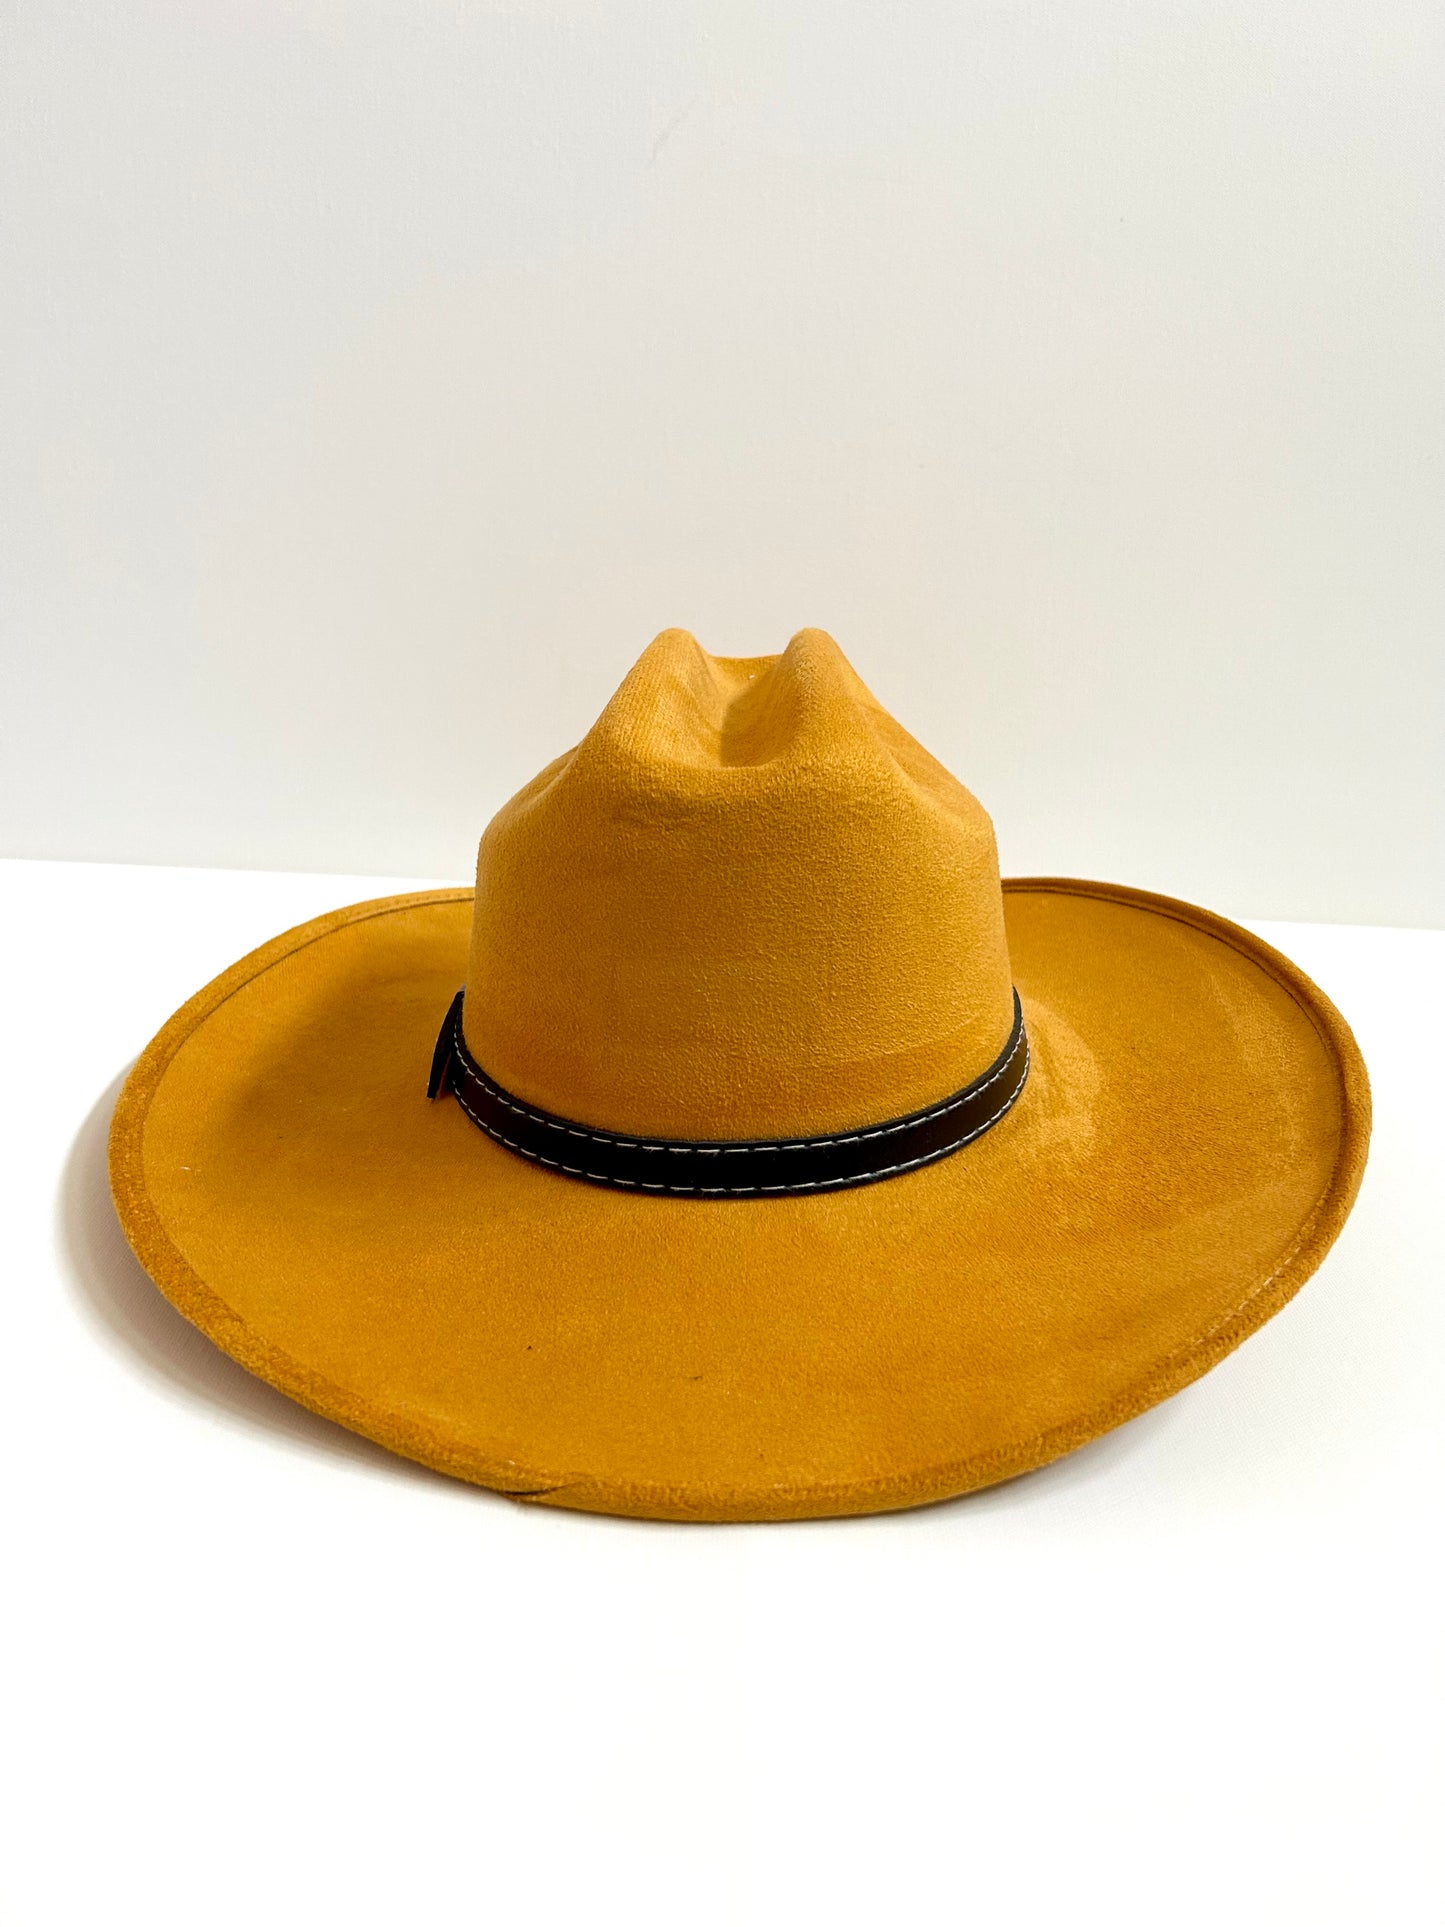 Imperfect Vegan Suede Hat - Austin - Mustard